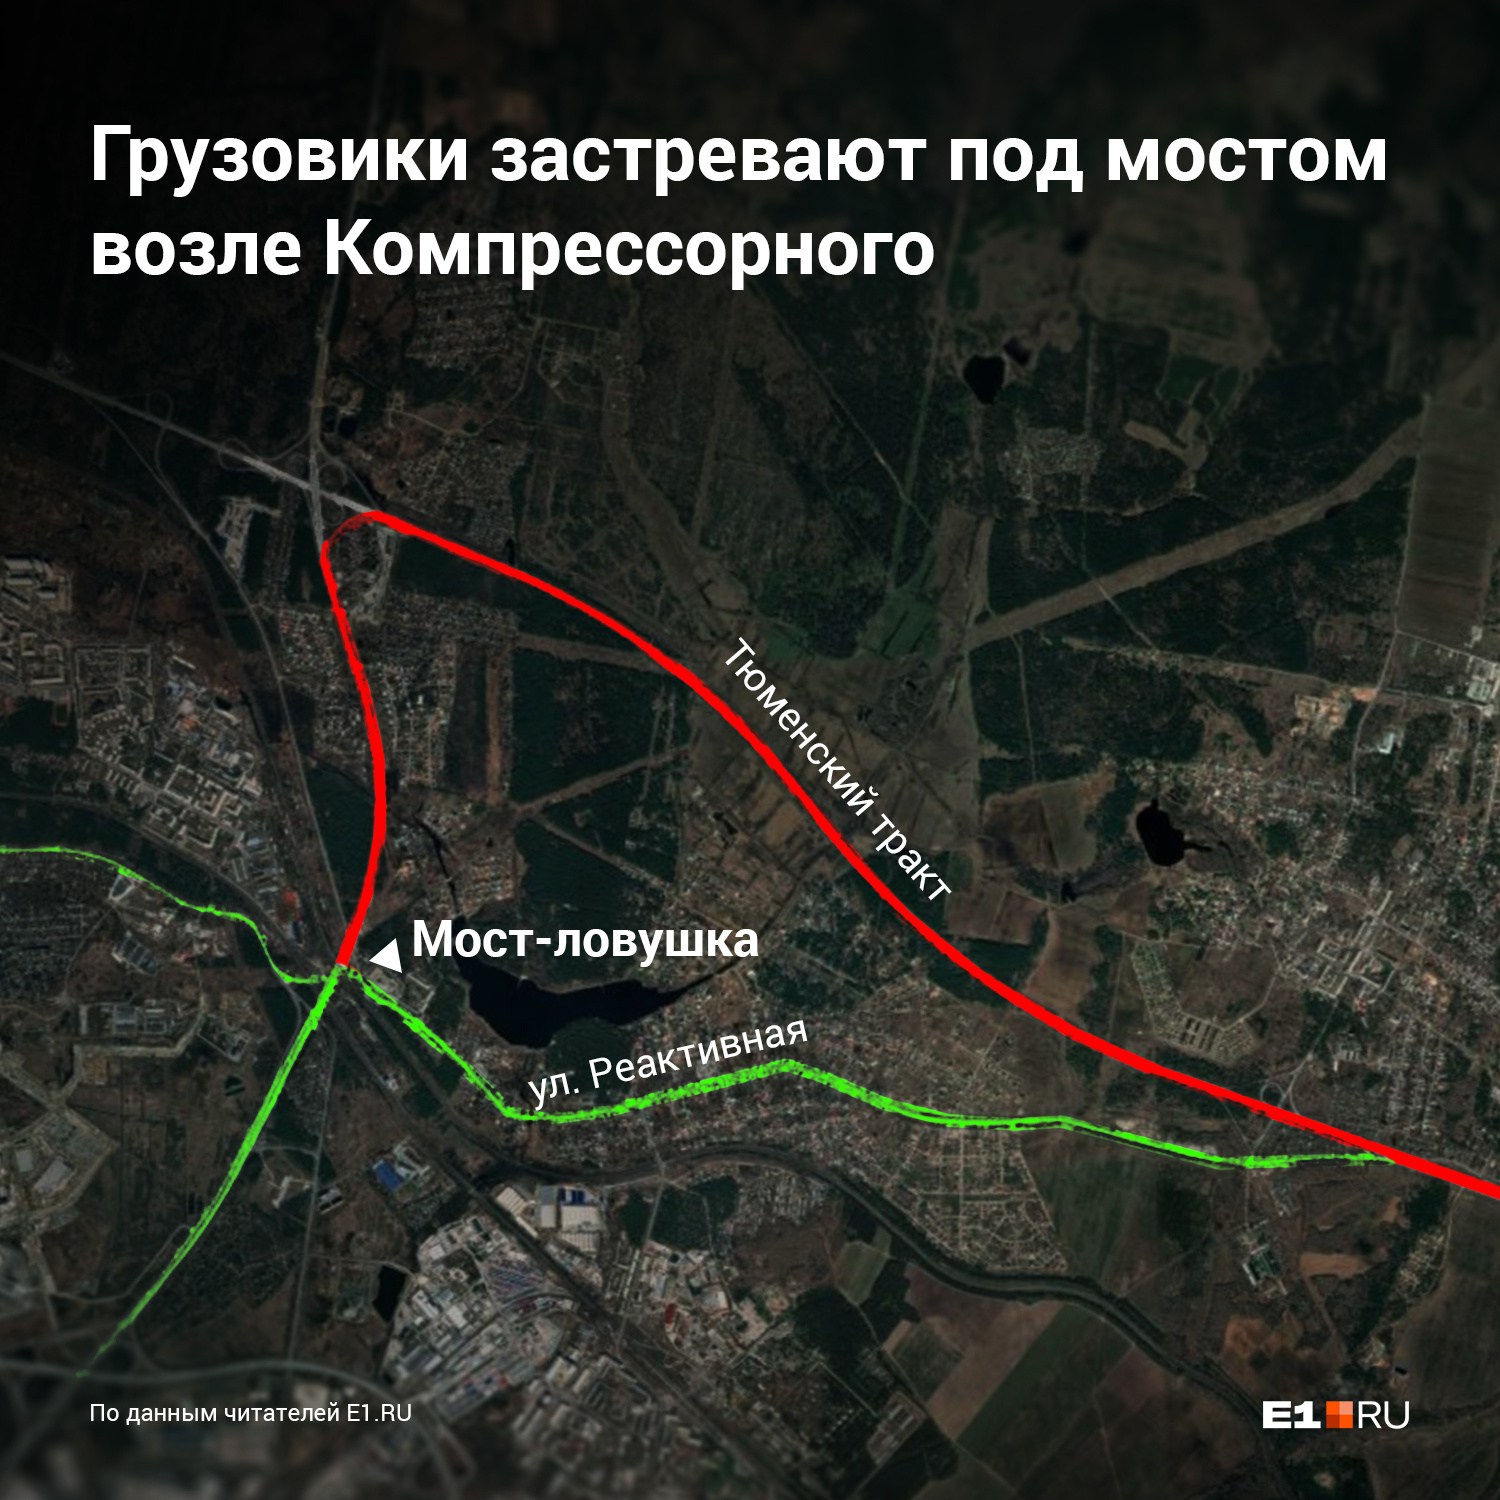 Грузовики едут по навигатору на Тюменский тракт в объезд <a href="https://www.e1.ru/text/transport/2022/10/04/71707580/" class="_" target="_blank">закрытого выезда с ЕКАД</a>